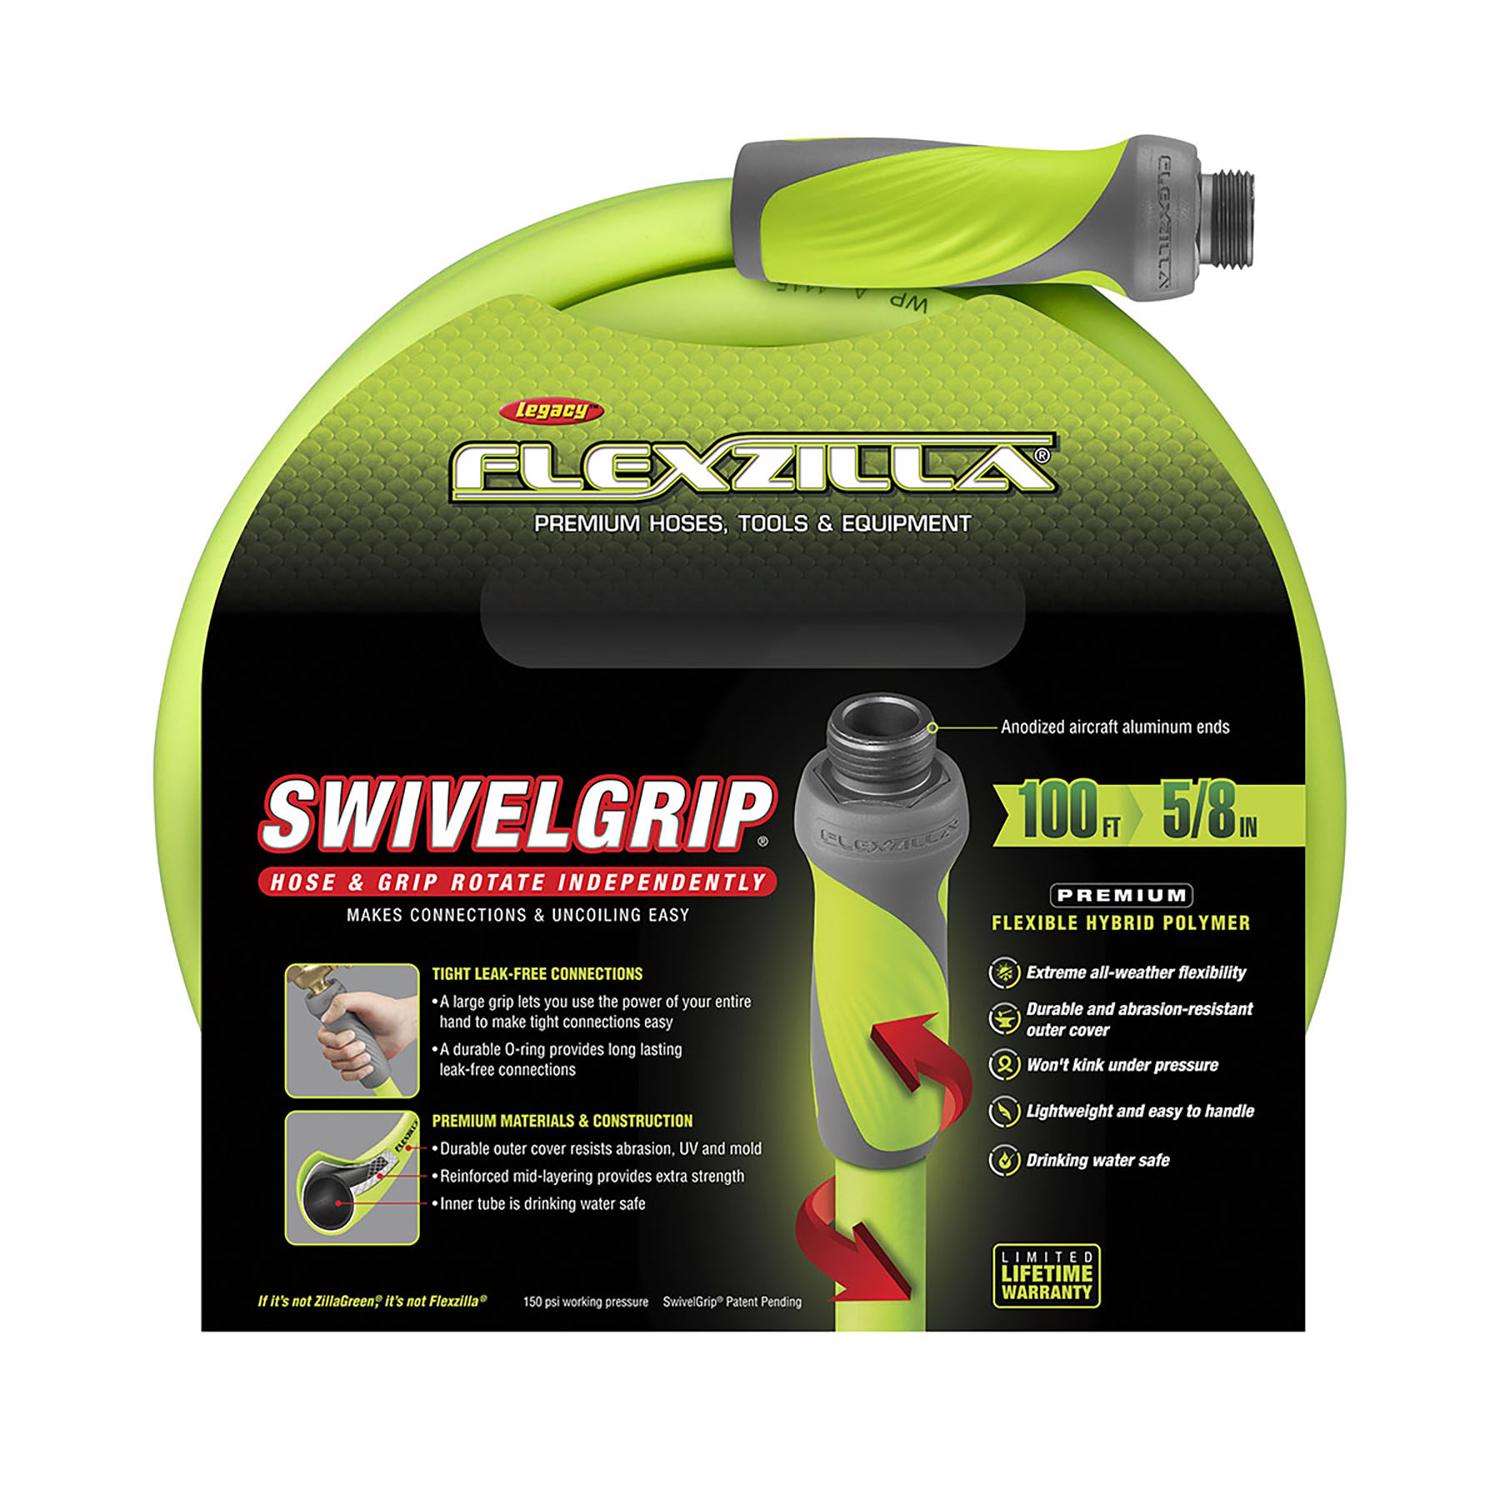 Flexzilla SwivelGrip Garden Hose - 100 Feet